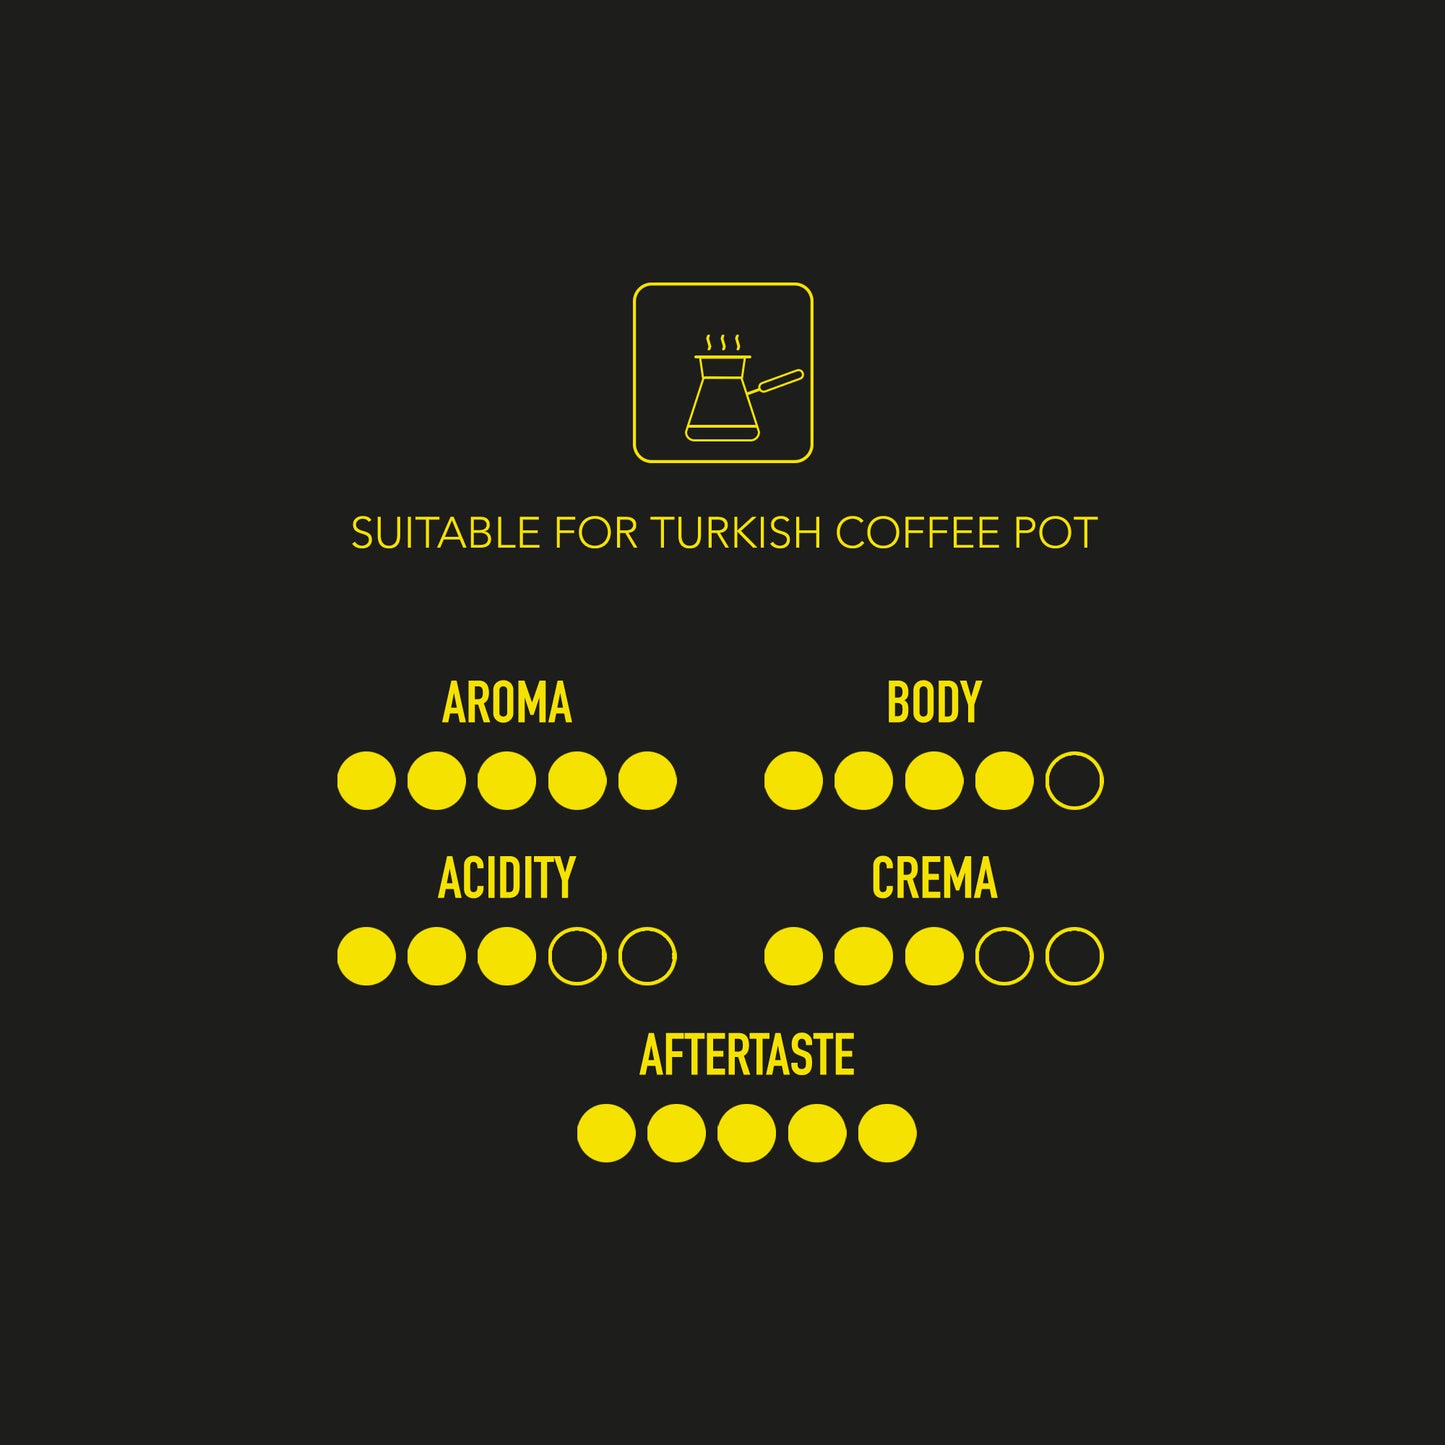 
                  
                    TÜRKÜ N.6 - Mastic Gum - Turkish Coffee with Mastic Gum (2x125gr)
                  
                